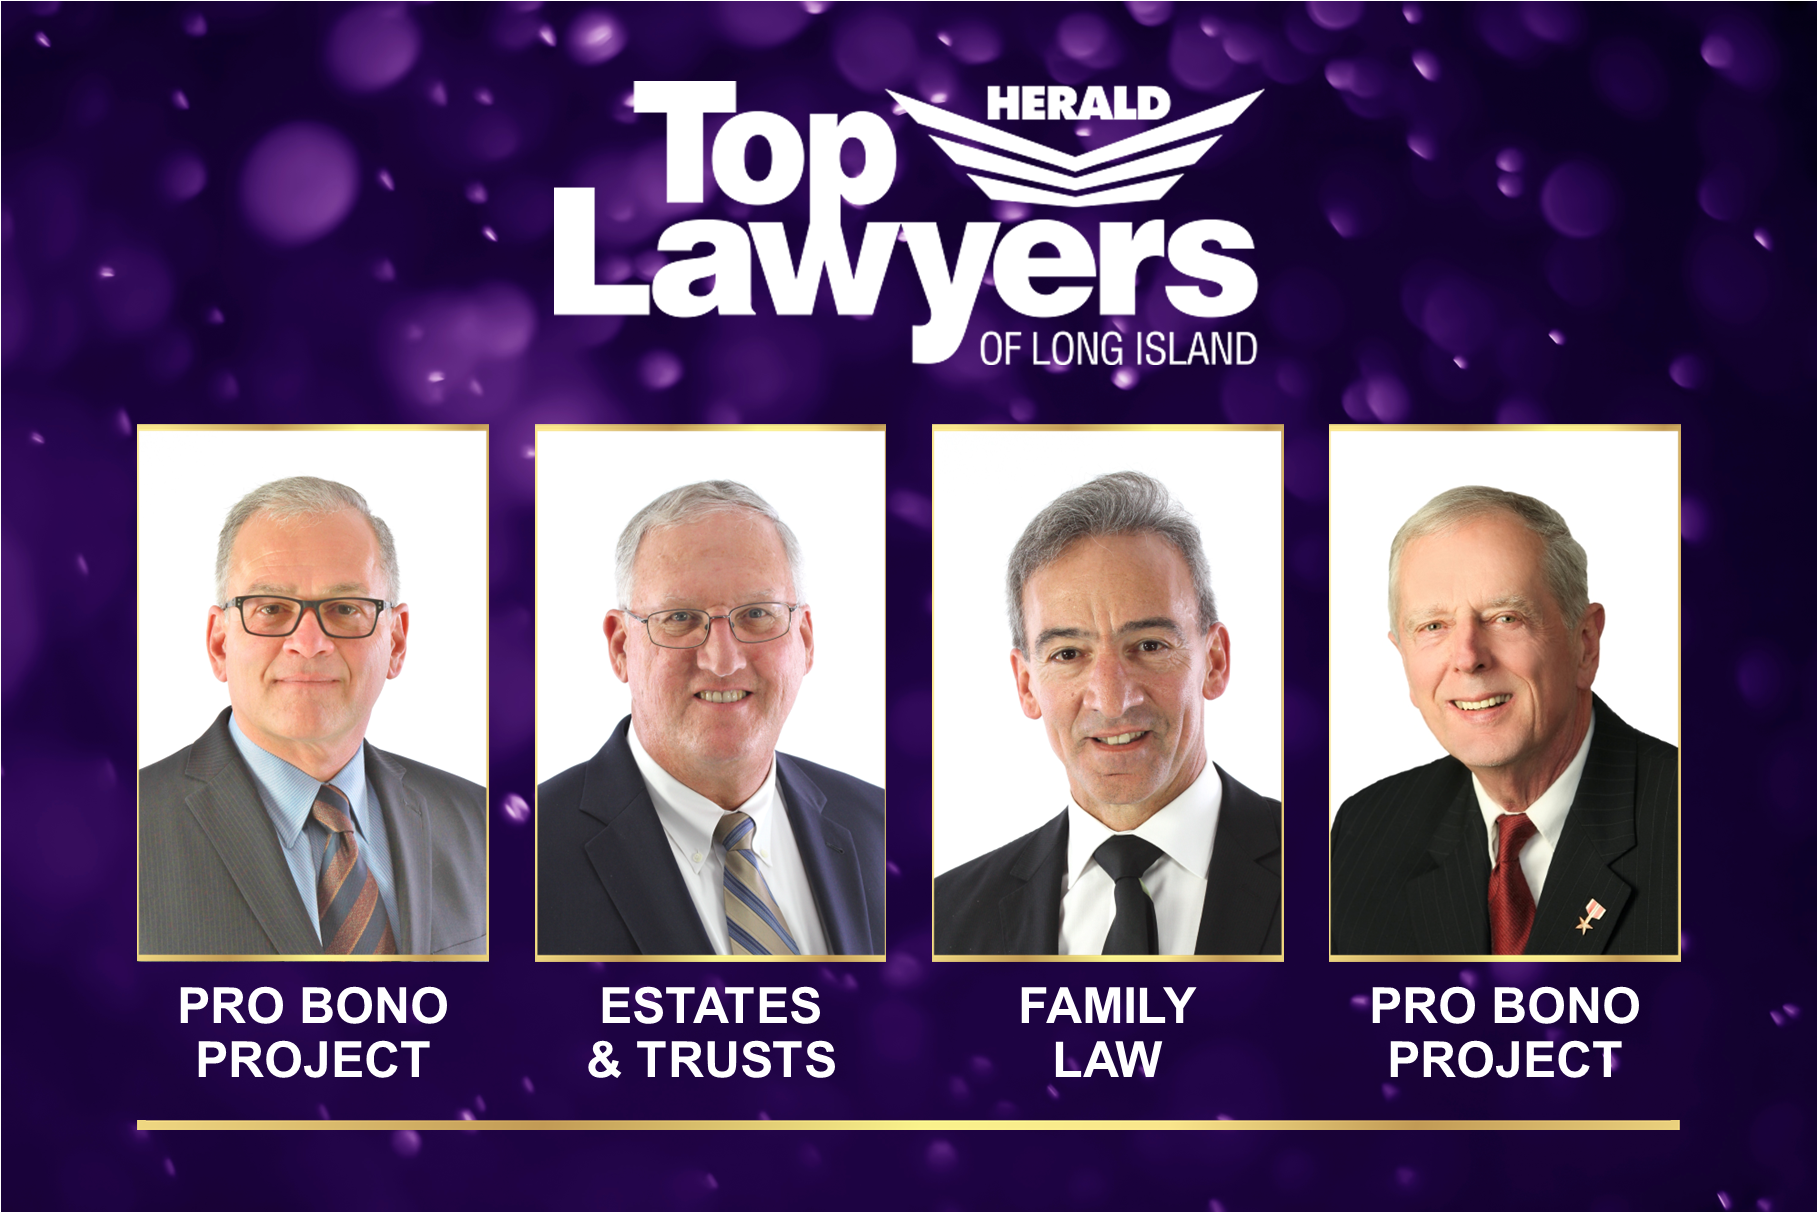 LI Herald Top Lawyers of Long Island 2021 honorees